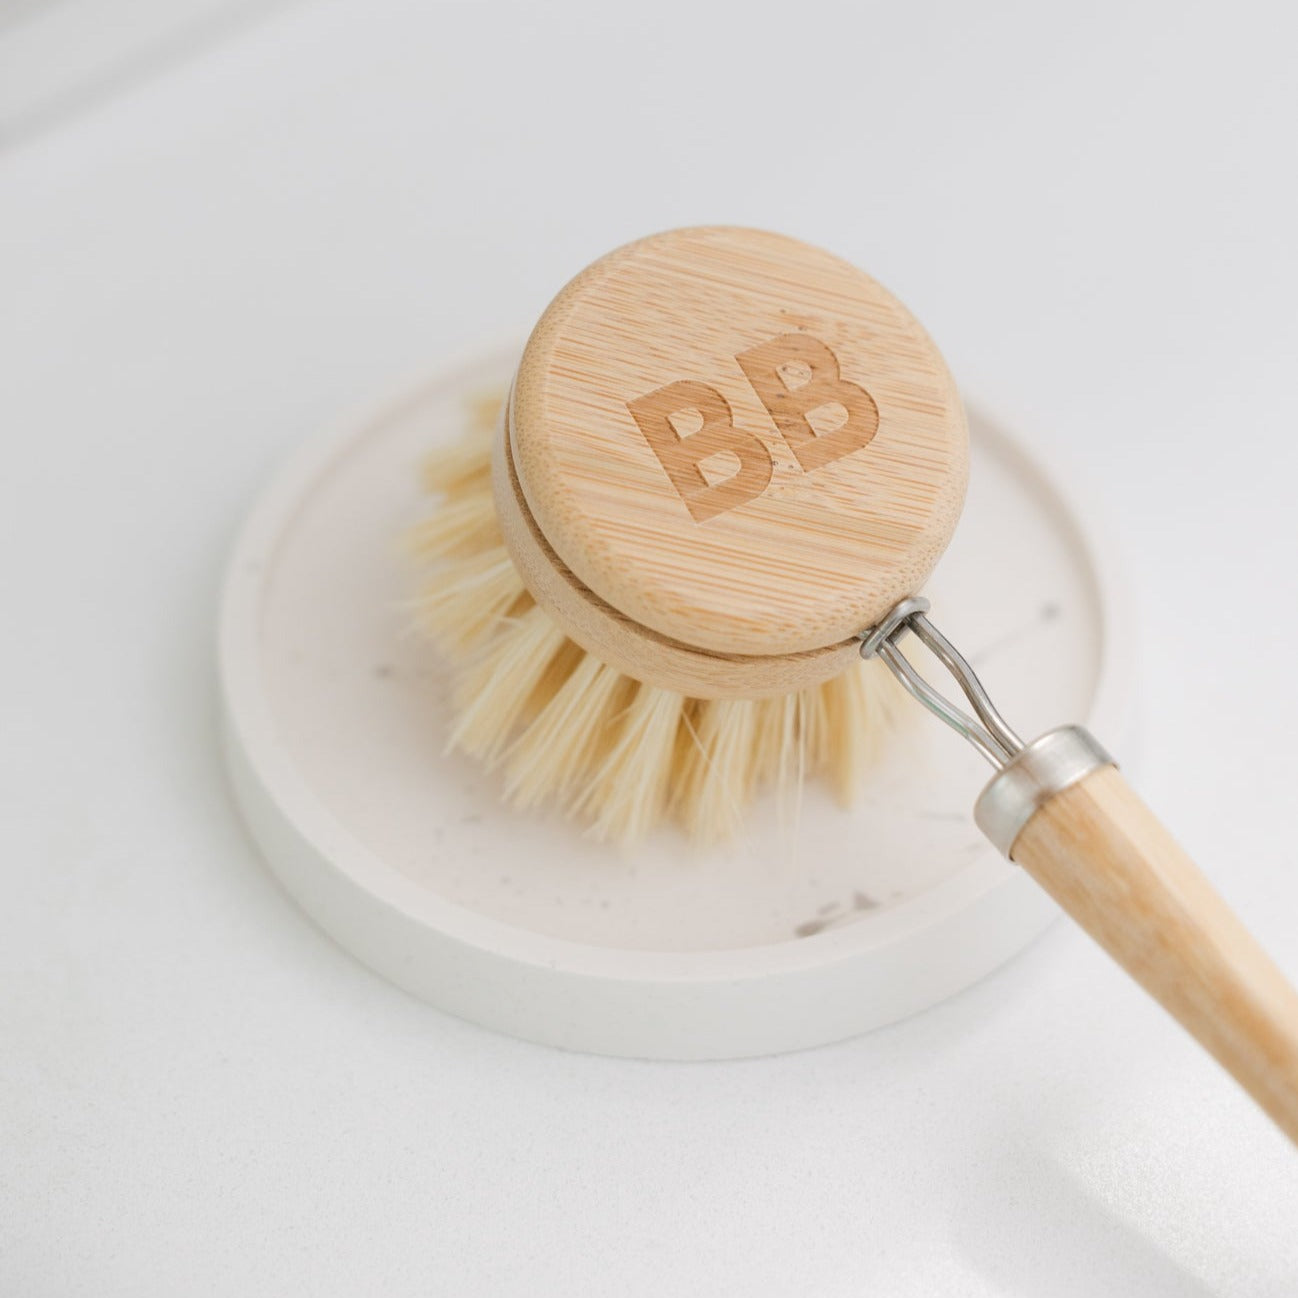 The Better Dish Brush